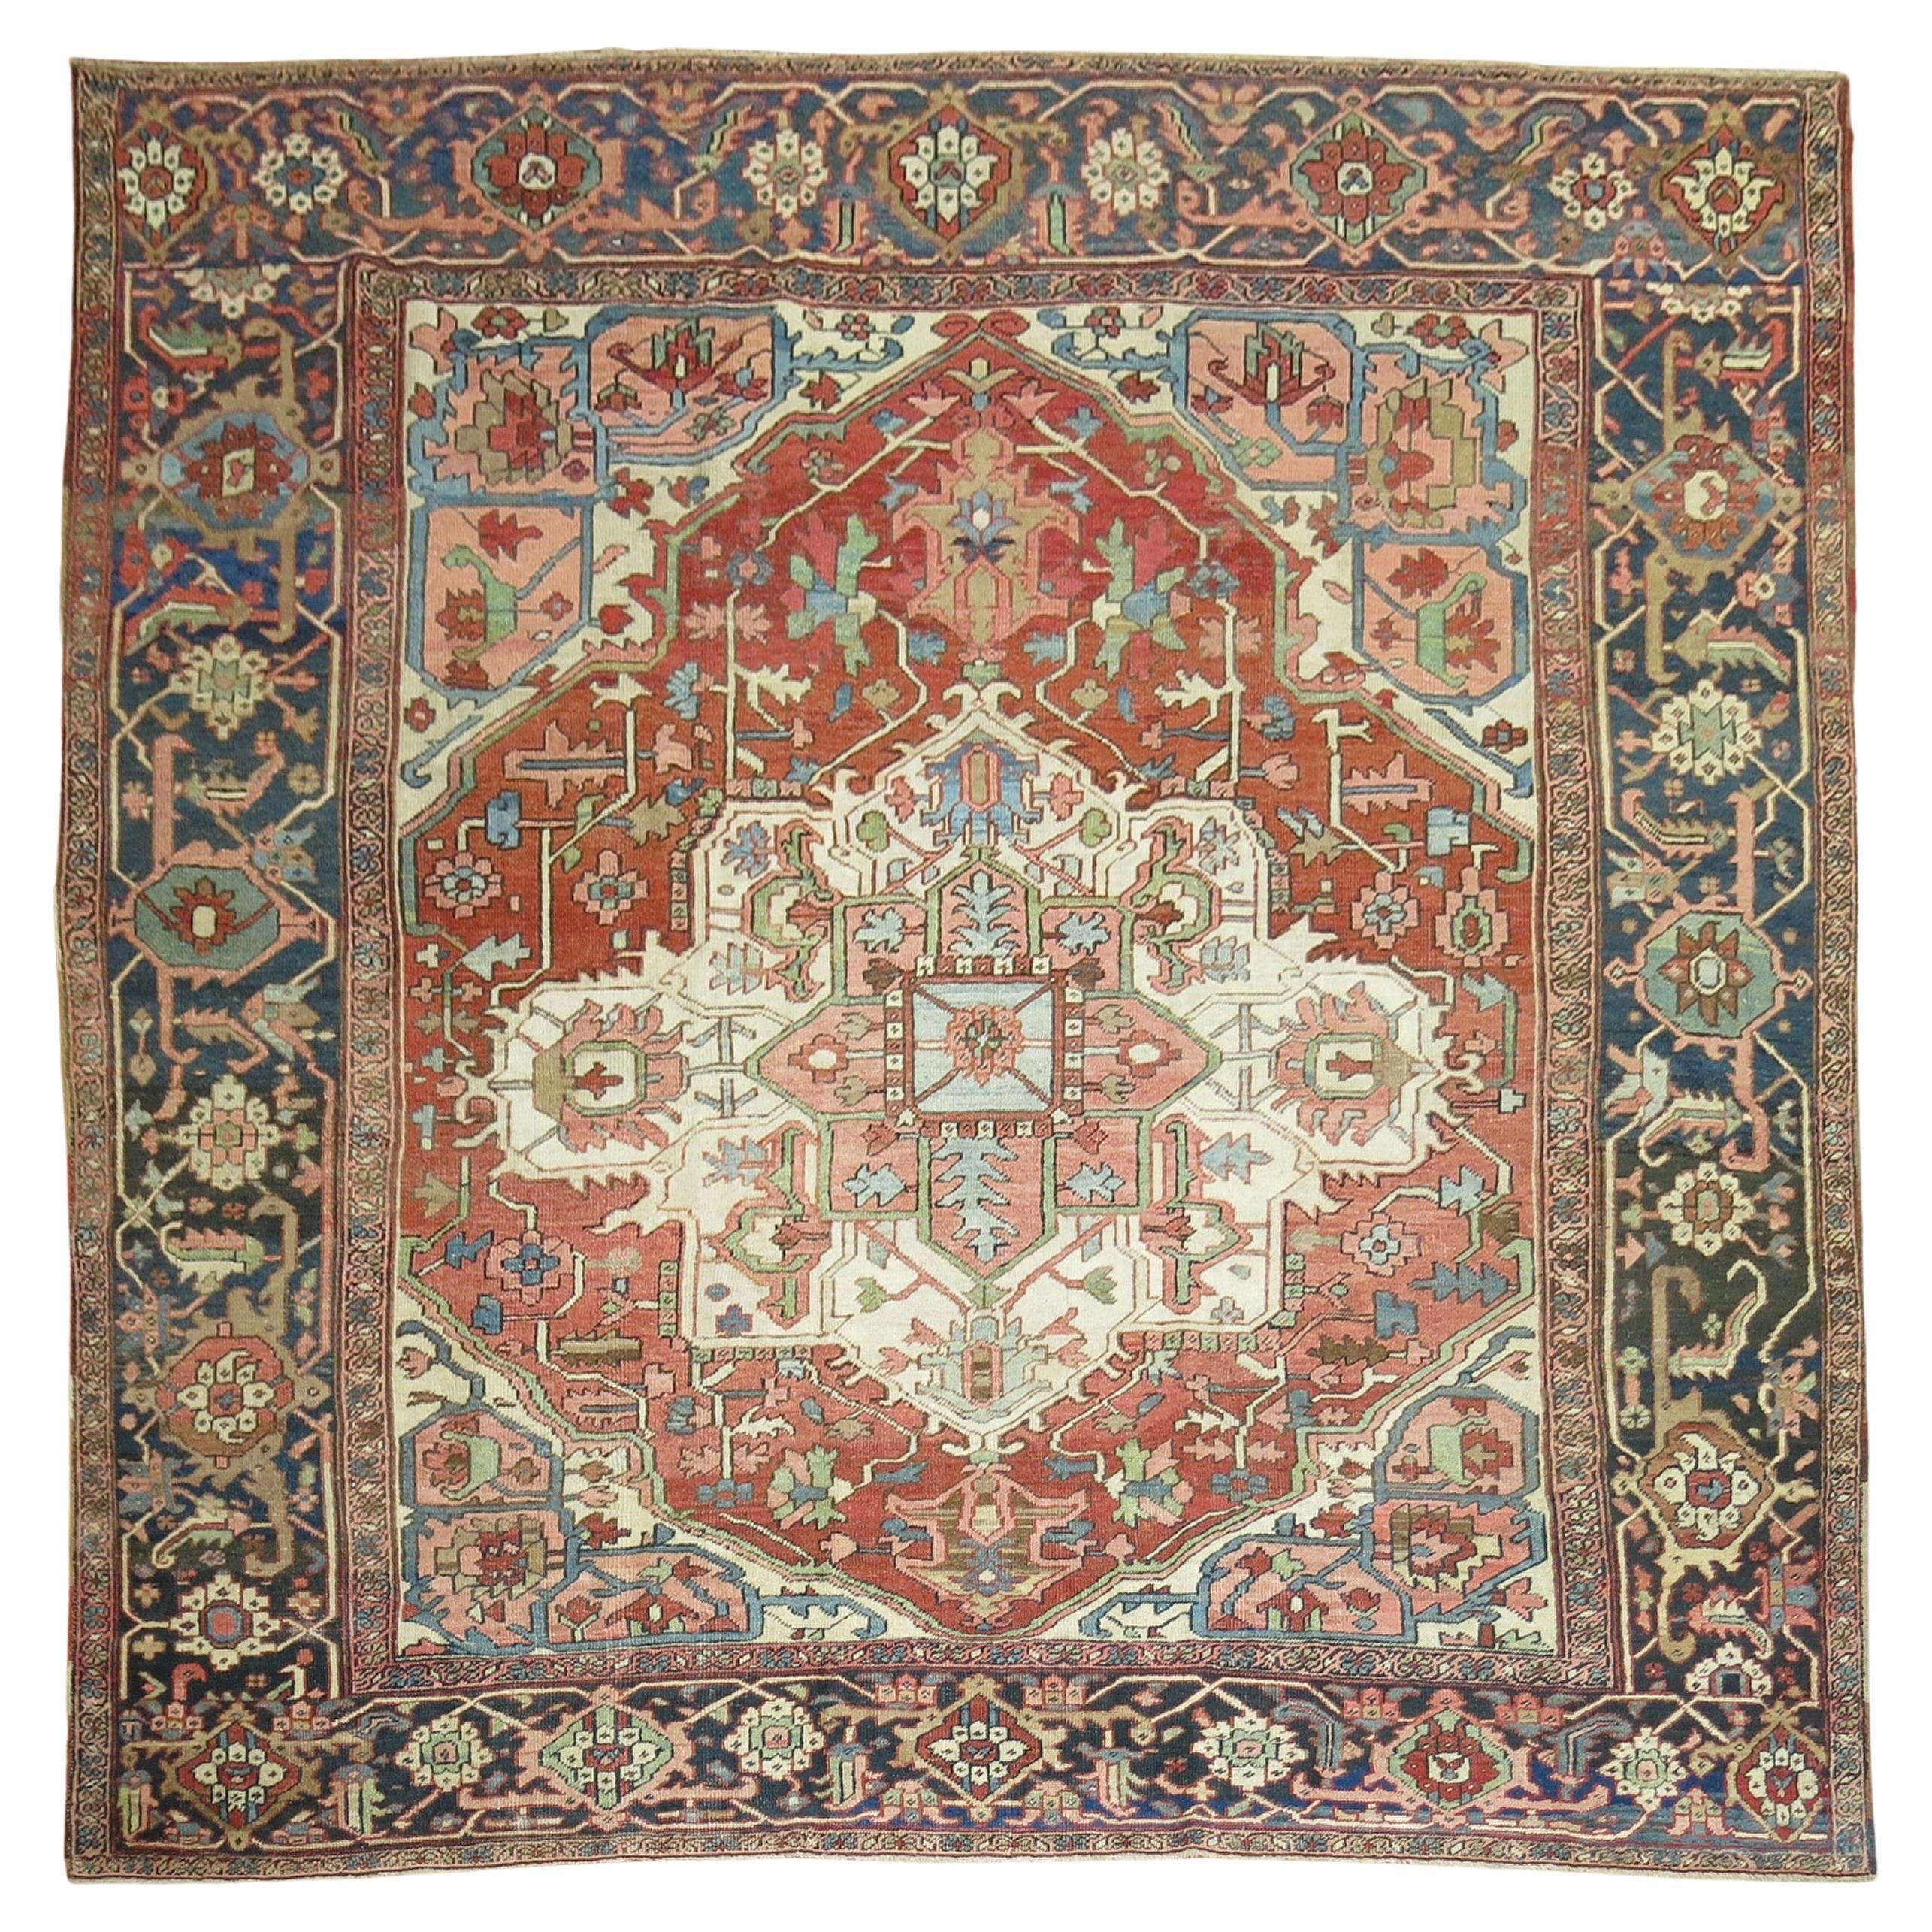 Grand tapis carré persan ancien Heriz de la collection Zabihi